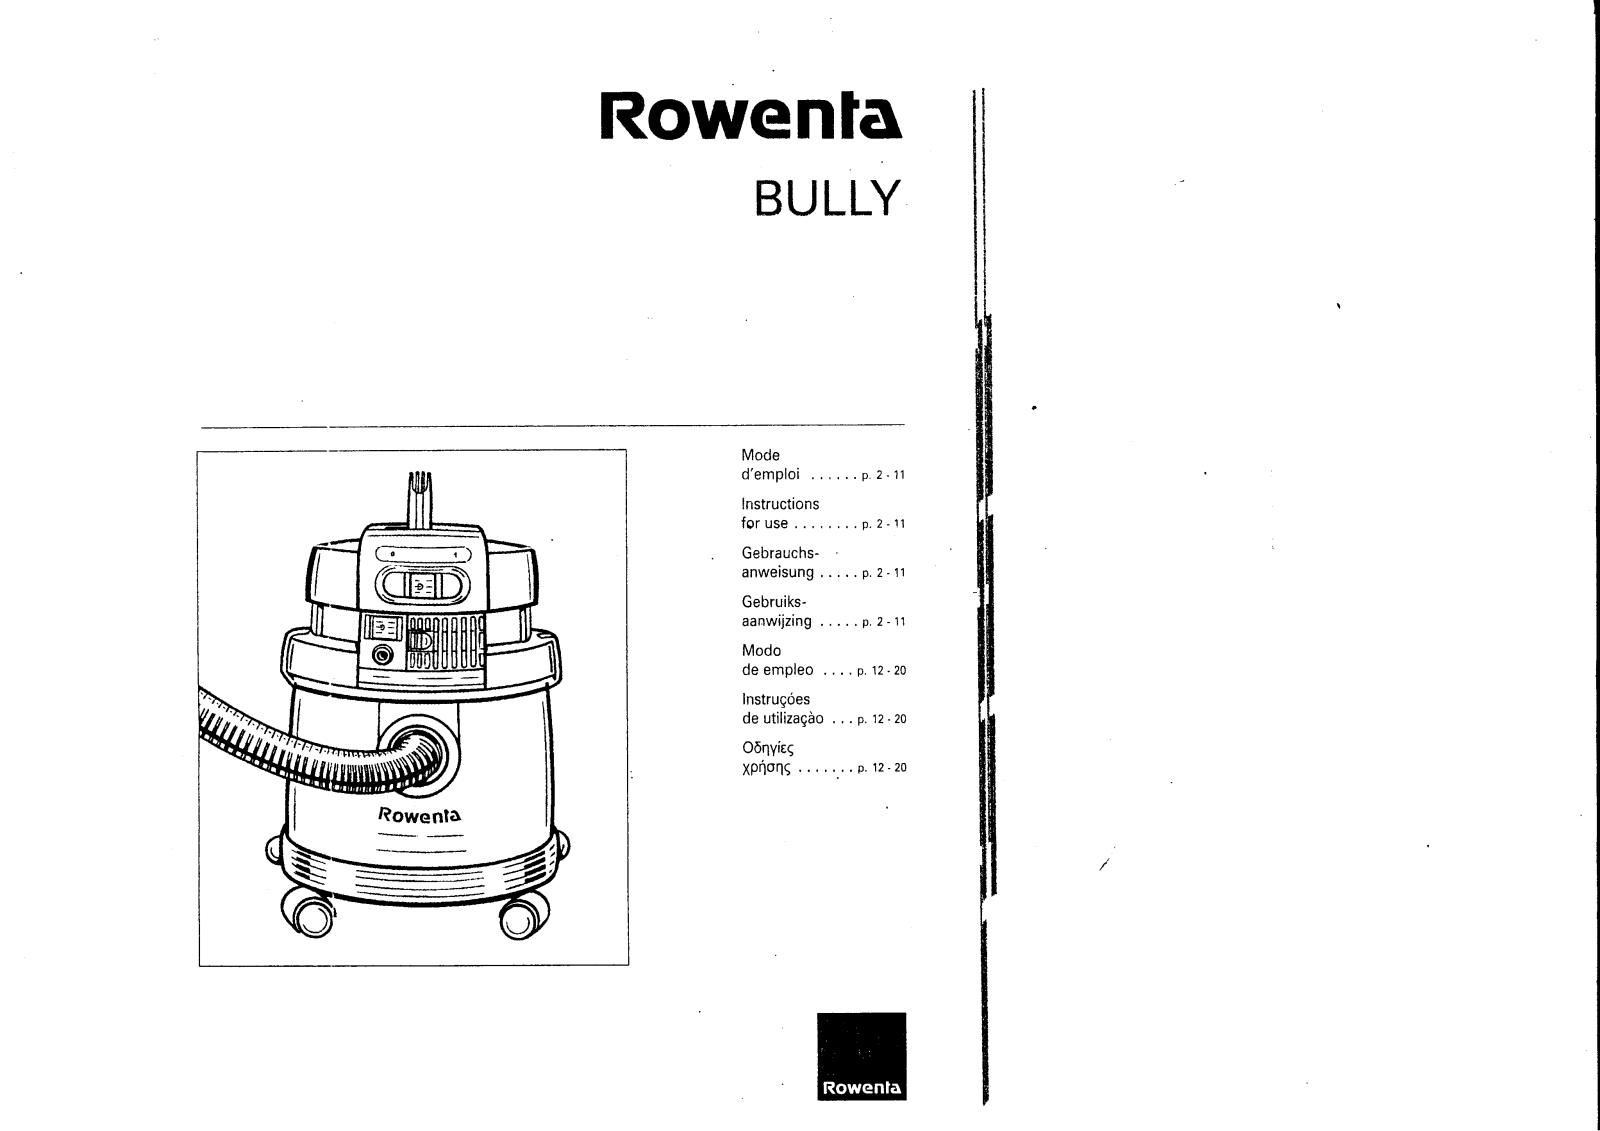 ROWENTA BULLY User Manual